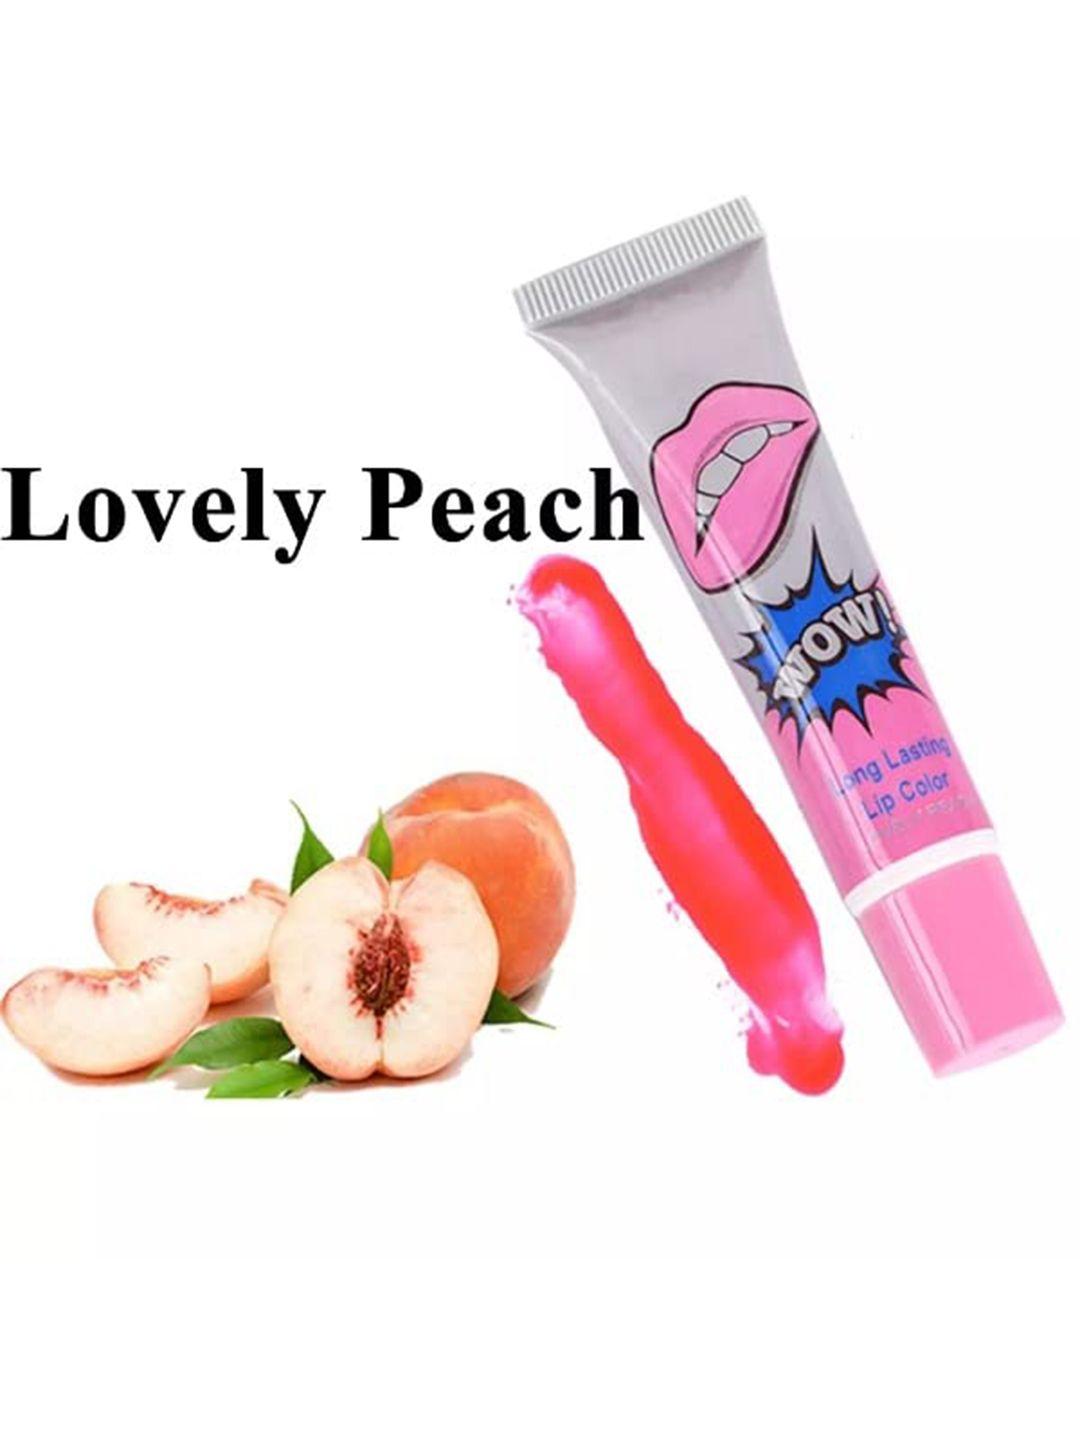 adbeni long lasting lip color - 15g - lovely peach